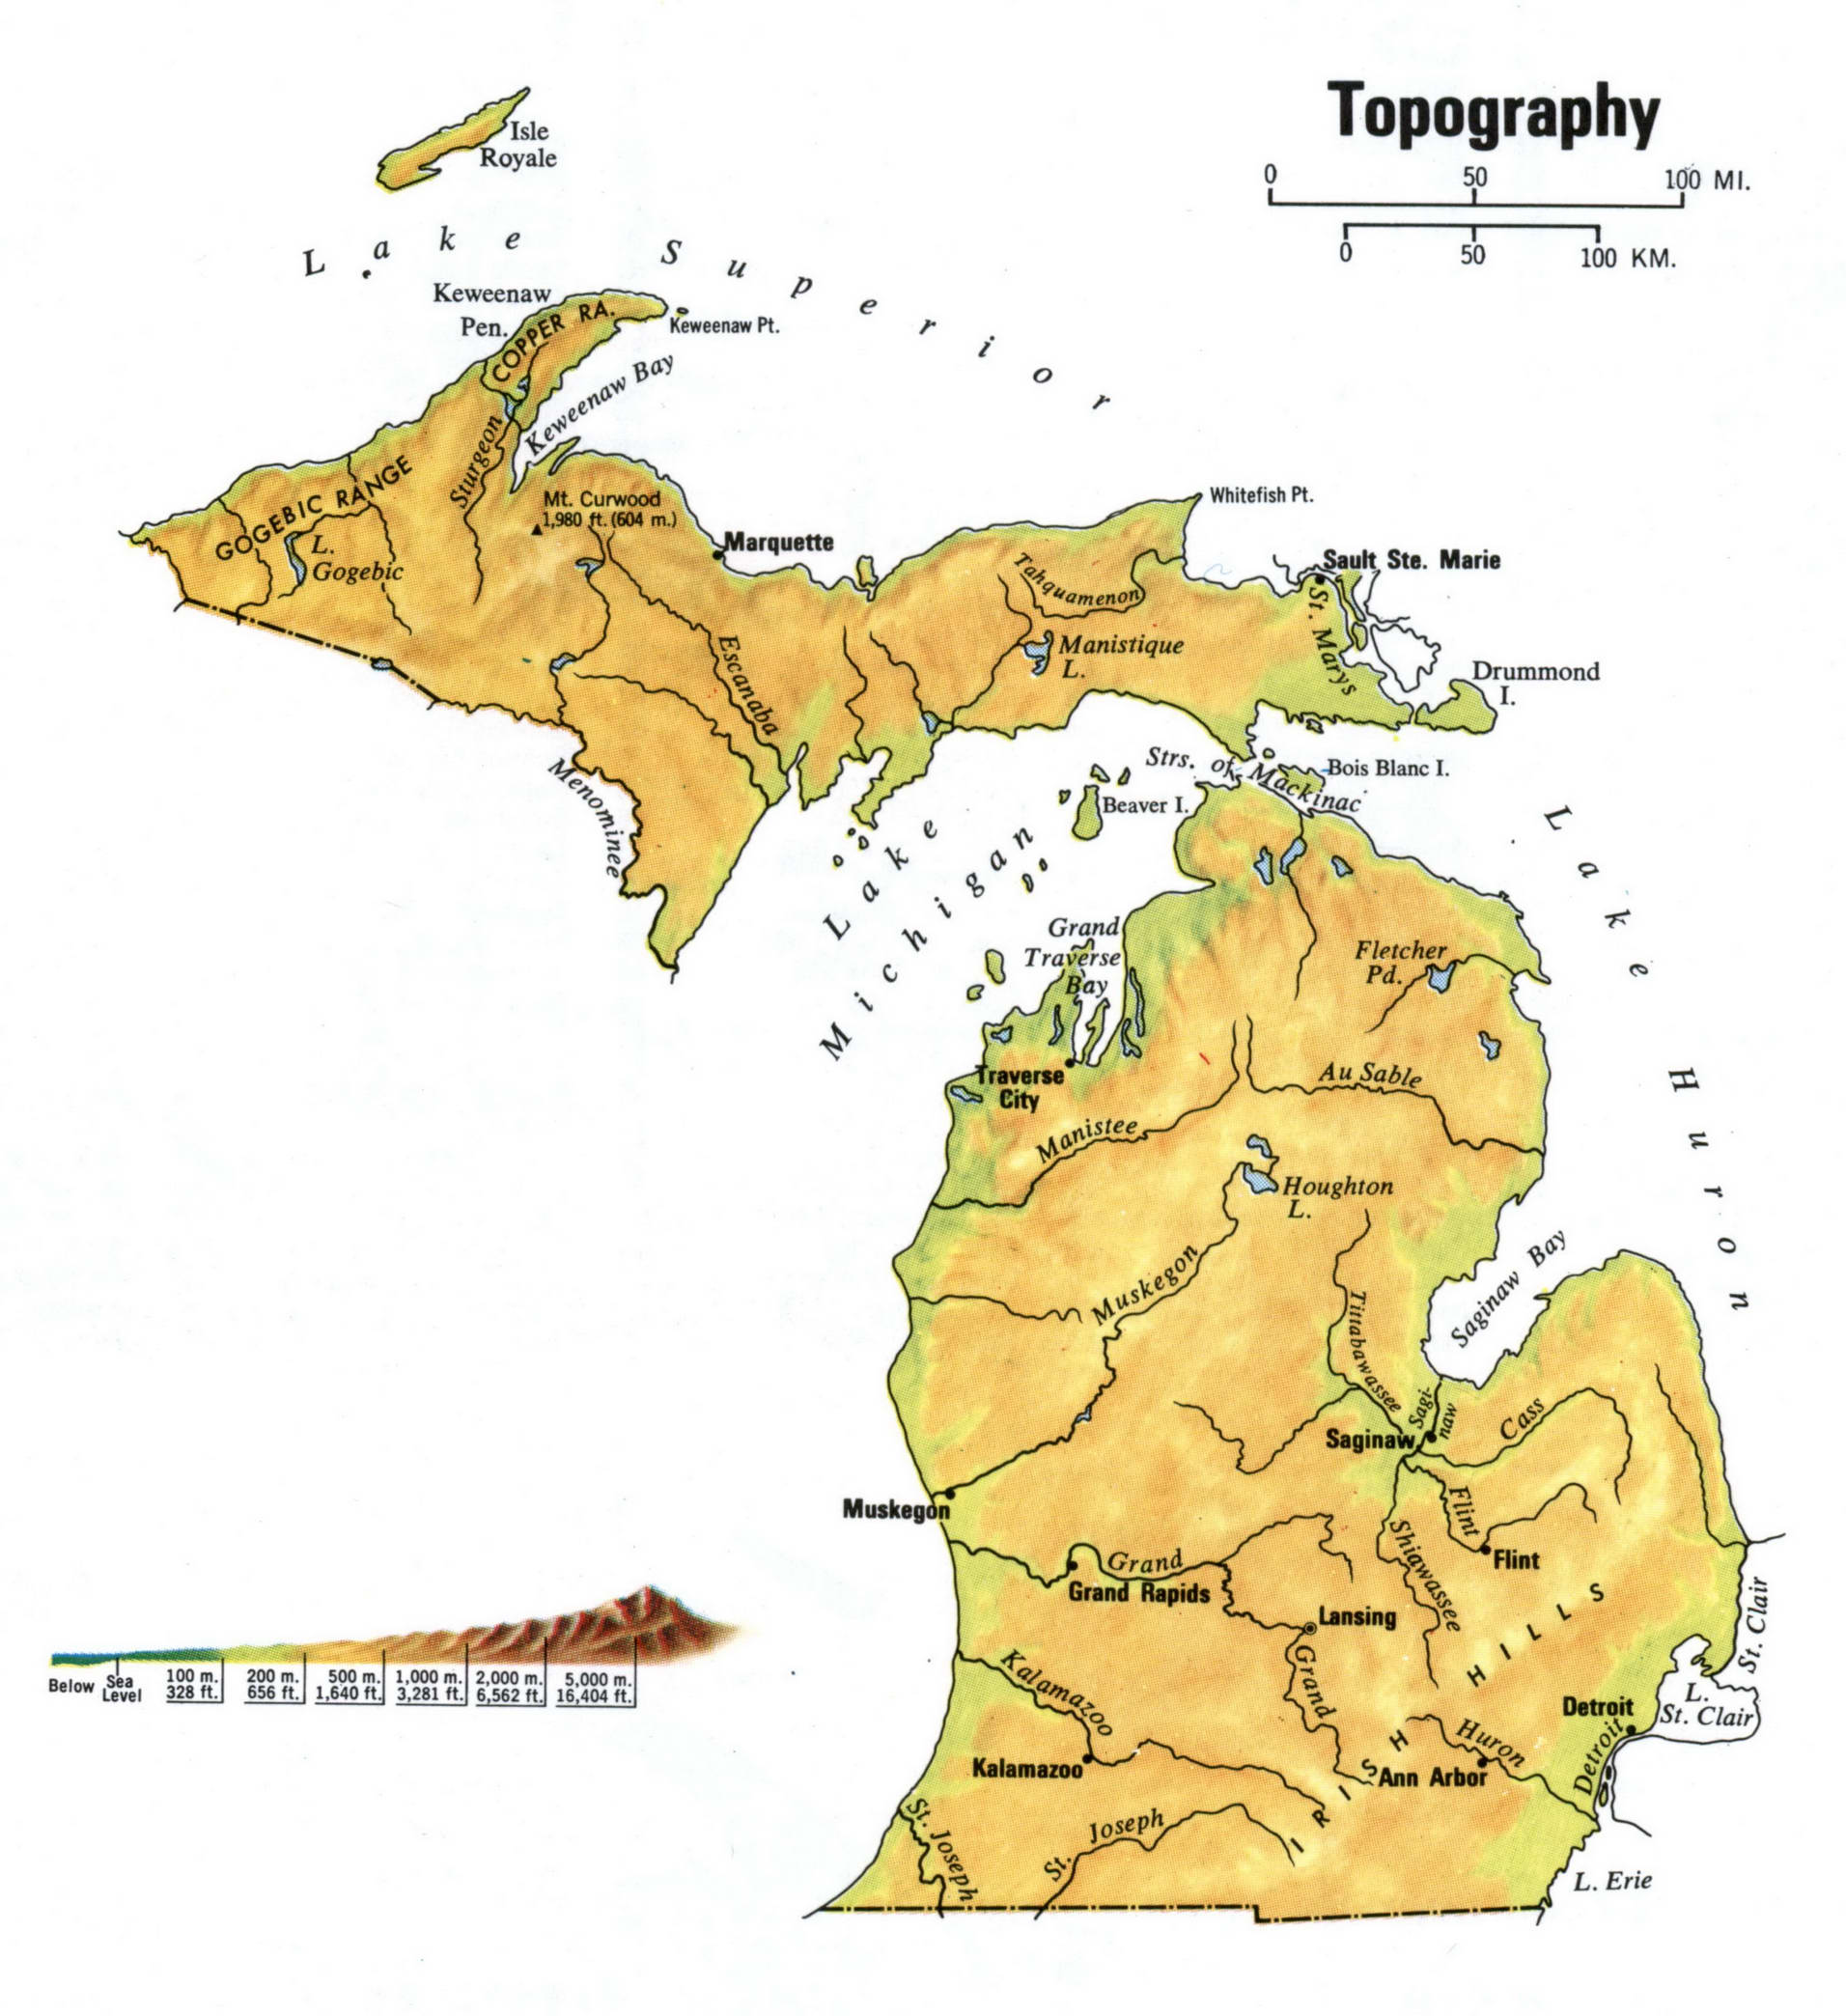 Michigan topography map